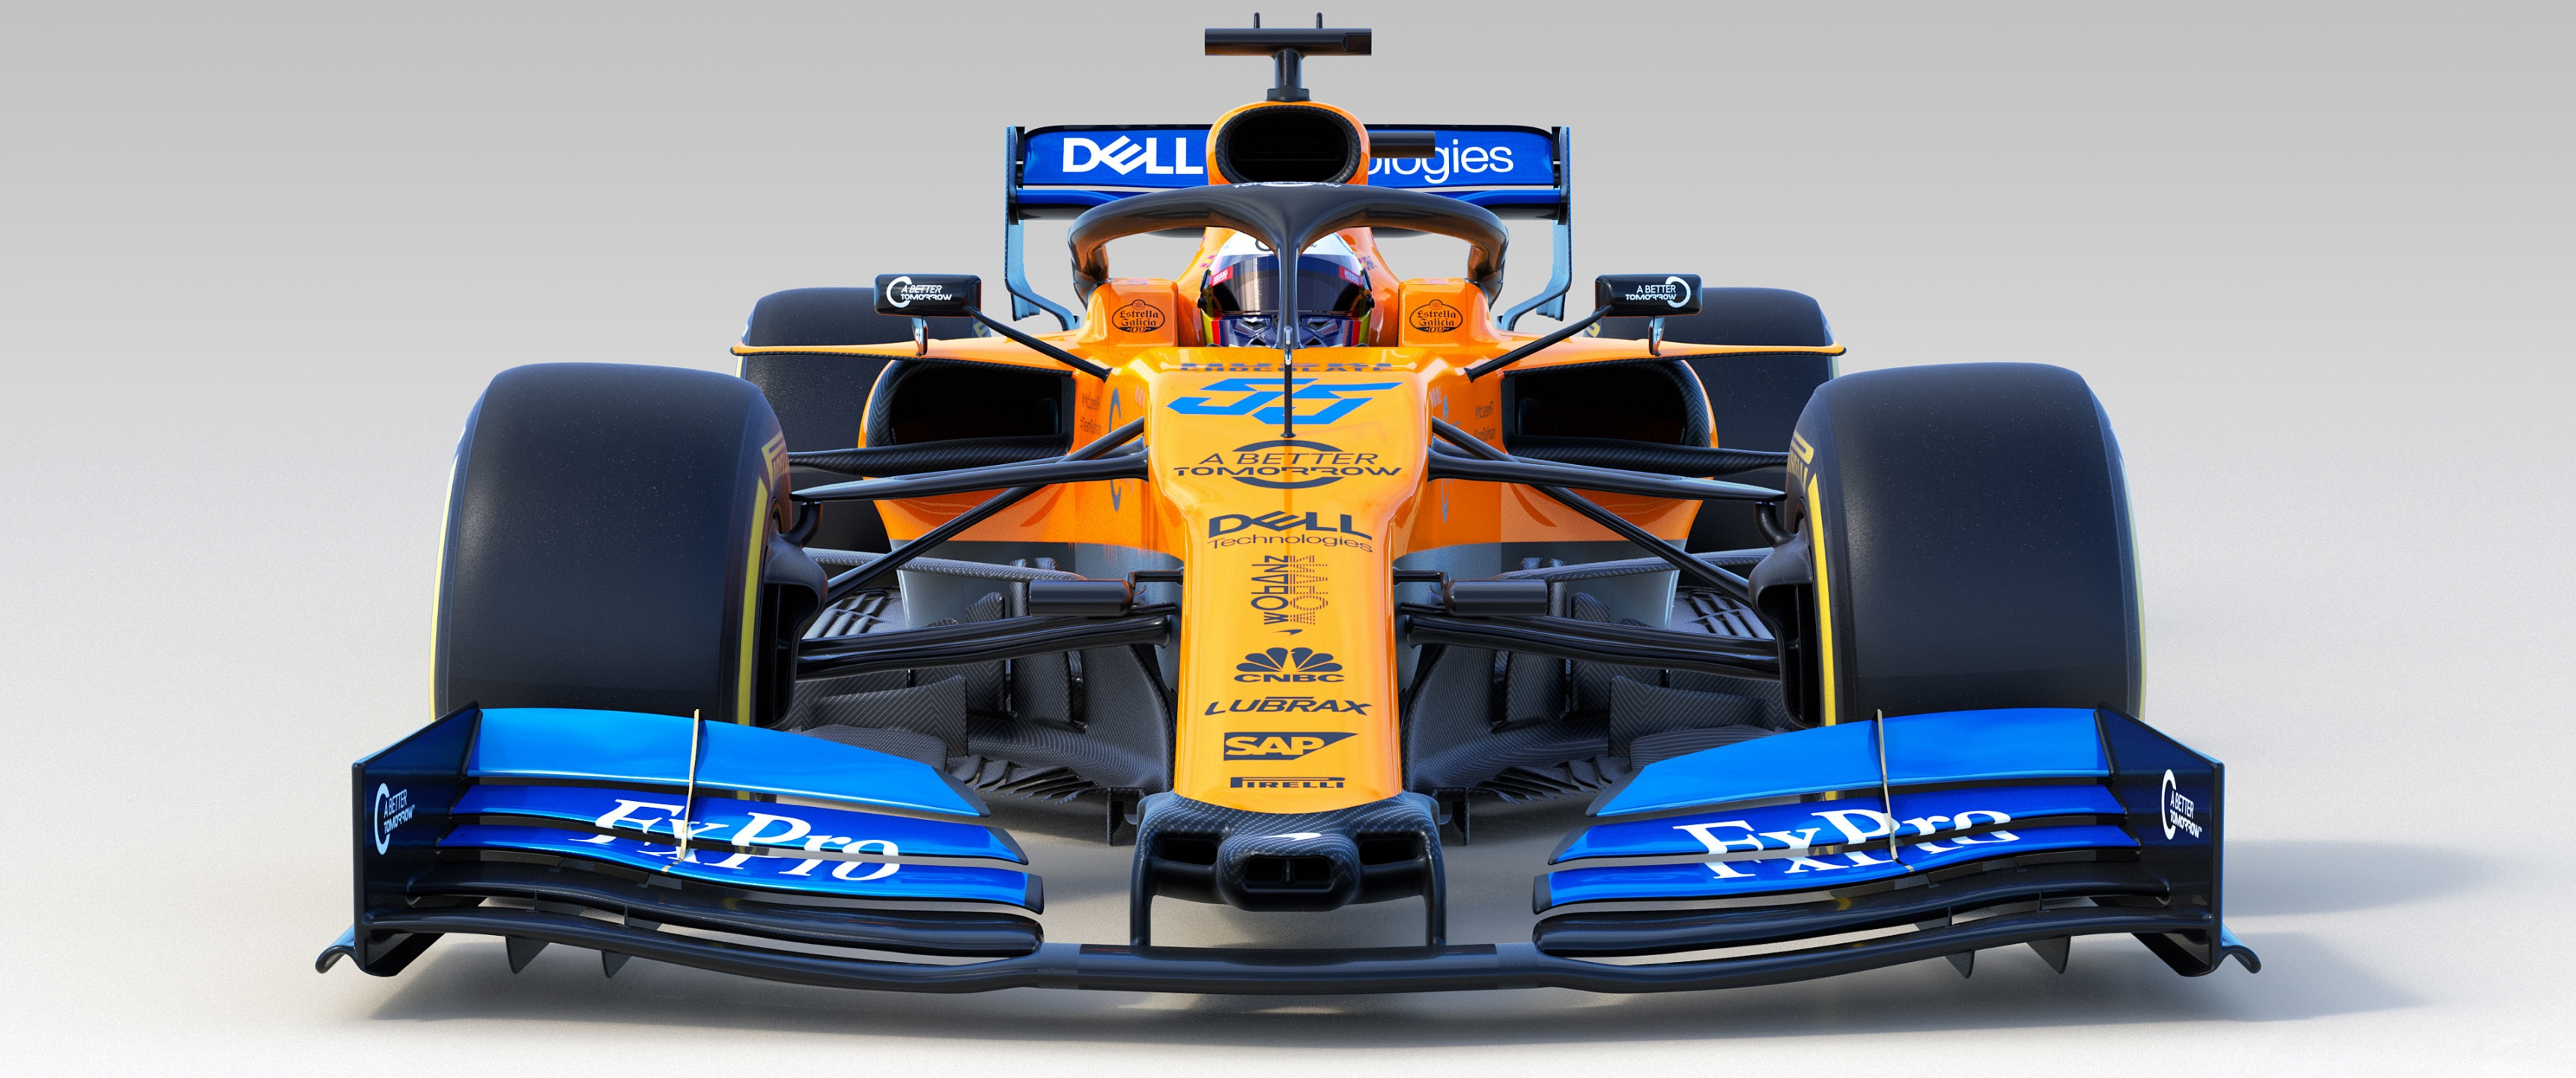 General 3440x1440 McLaren Formula 1 Formula 1 race cars